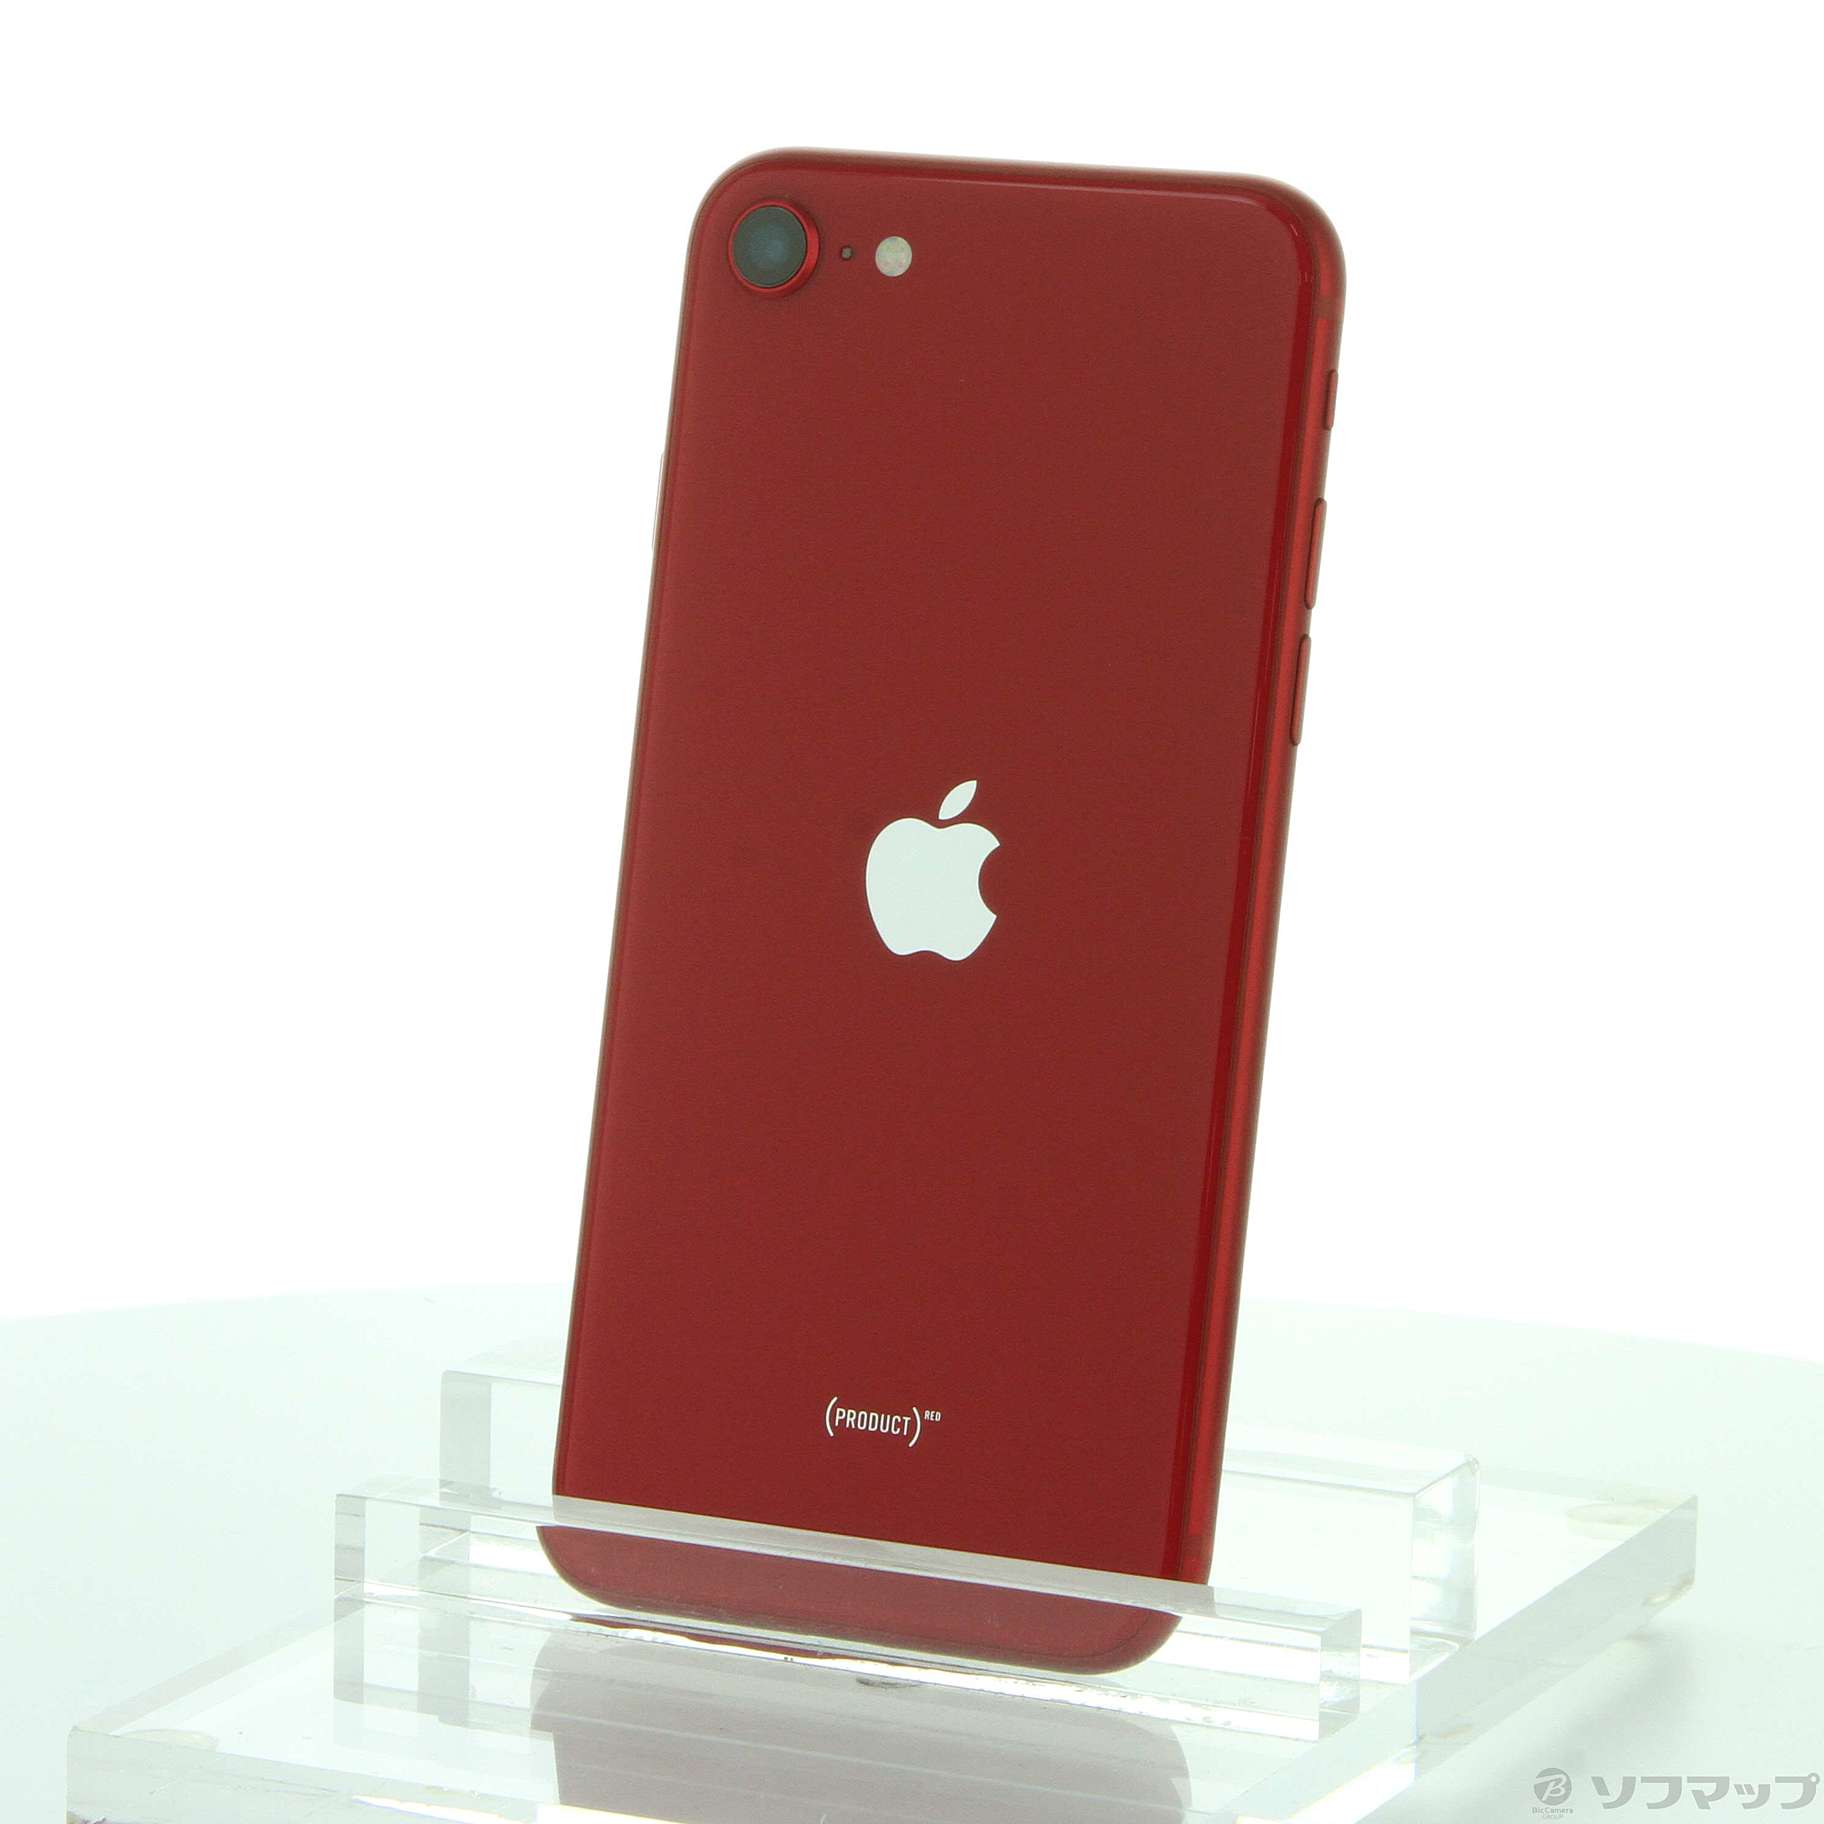 iPhone SE (第2世代) 64GB SIMフリー 中古(白ロム)価格比較 - 価格.com